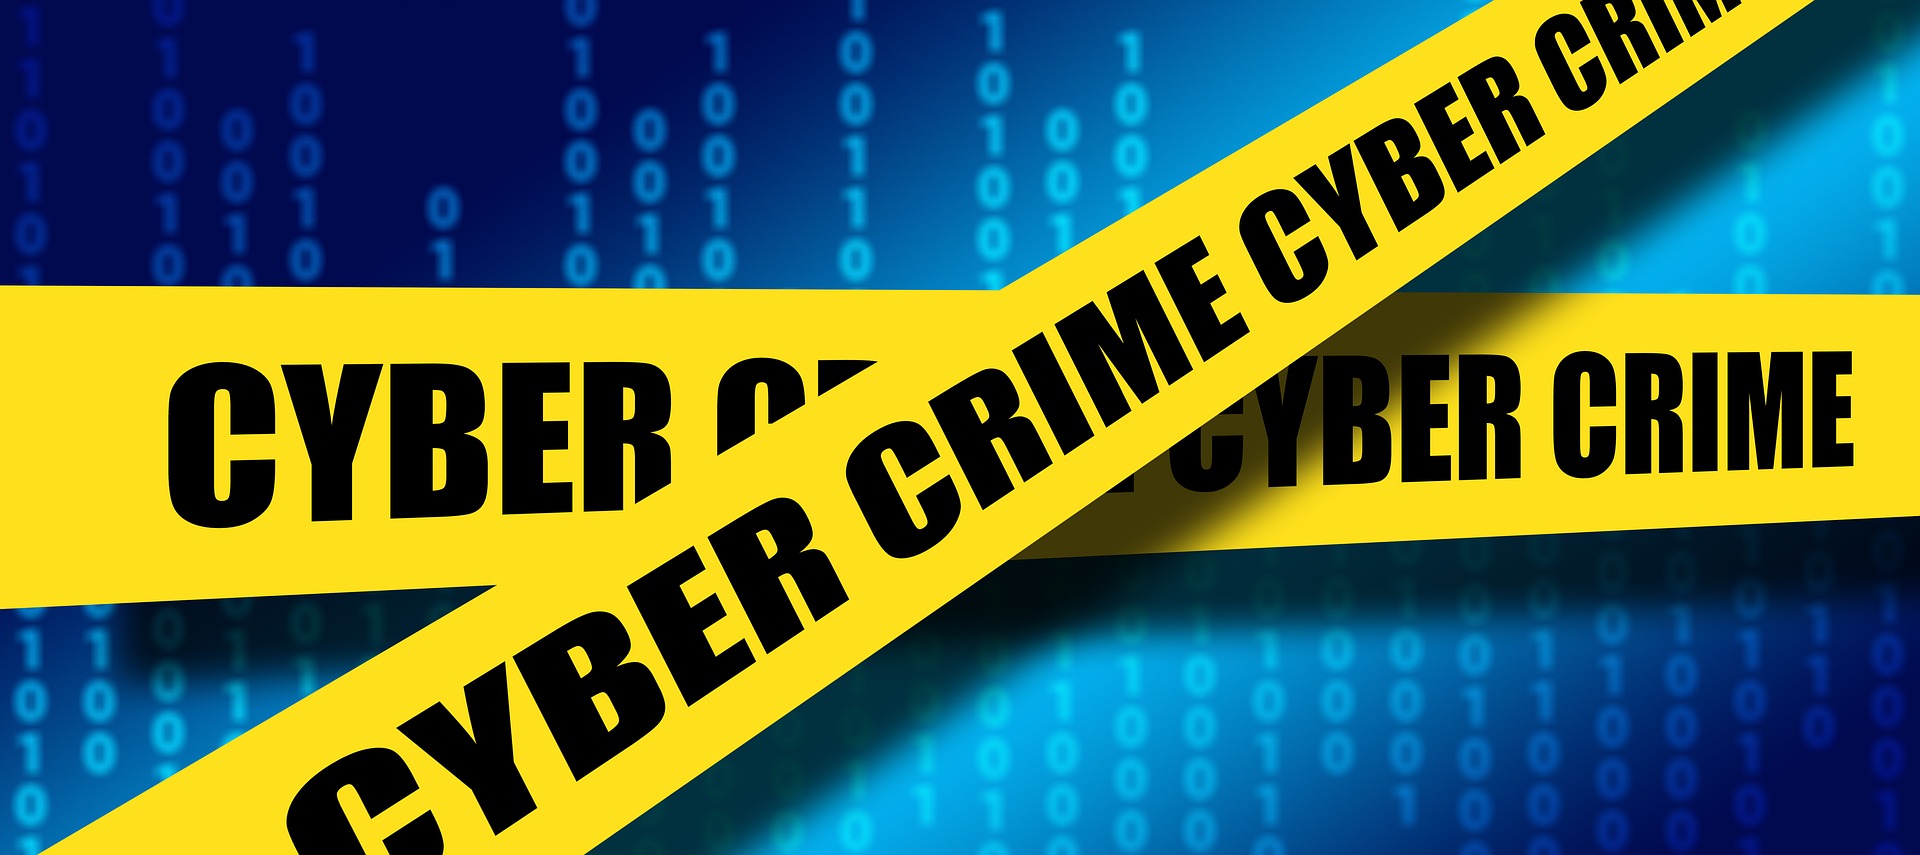 Cyber Crime Smishing